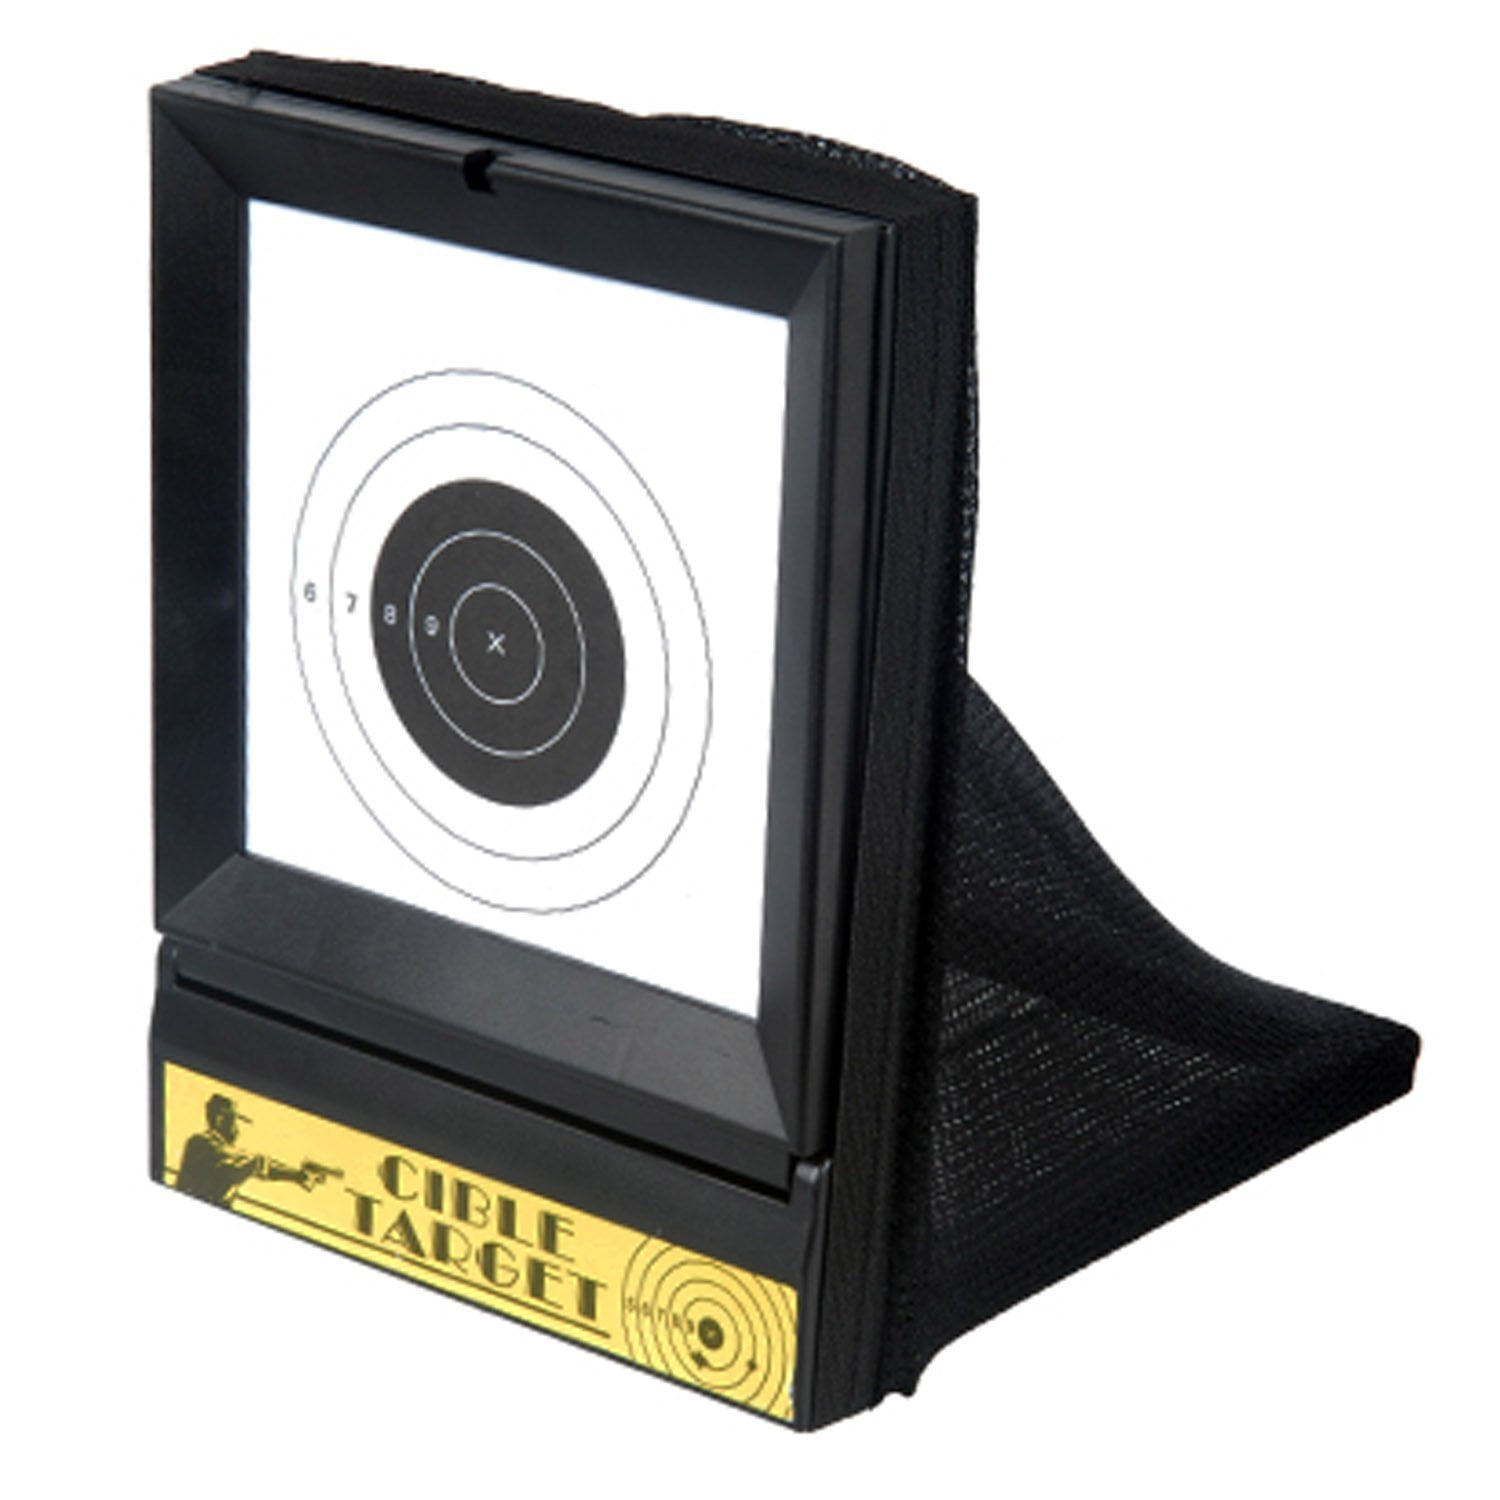 Airsoft Gun GEL Target Black Ops Game REUSE & Paper Targets X20 for sale online 